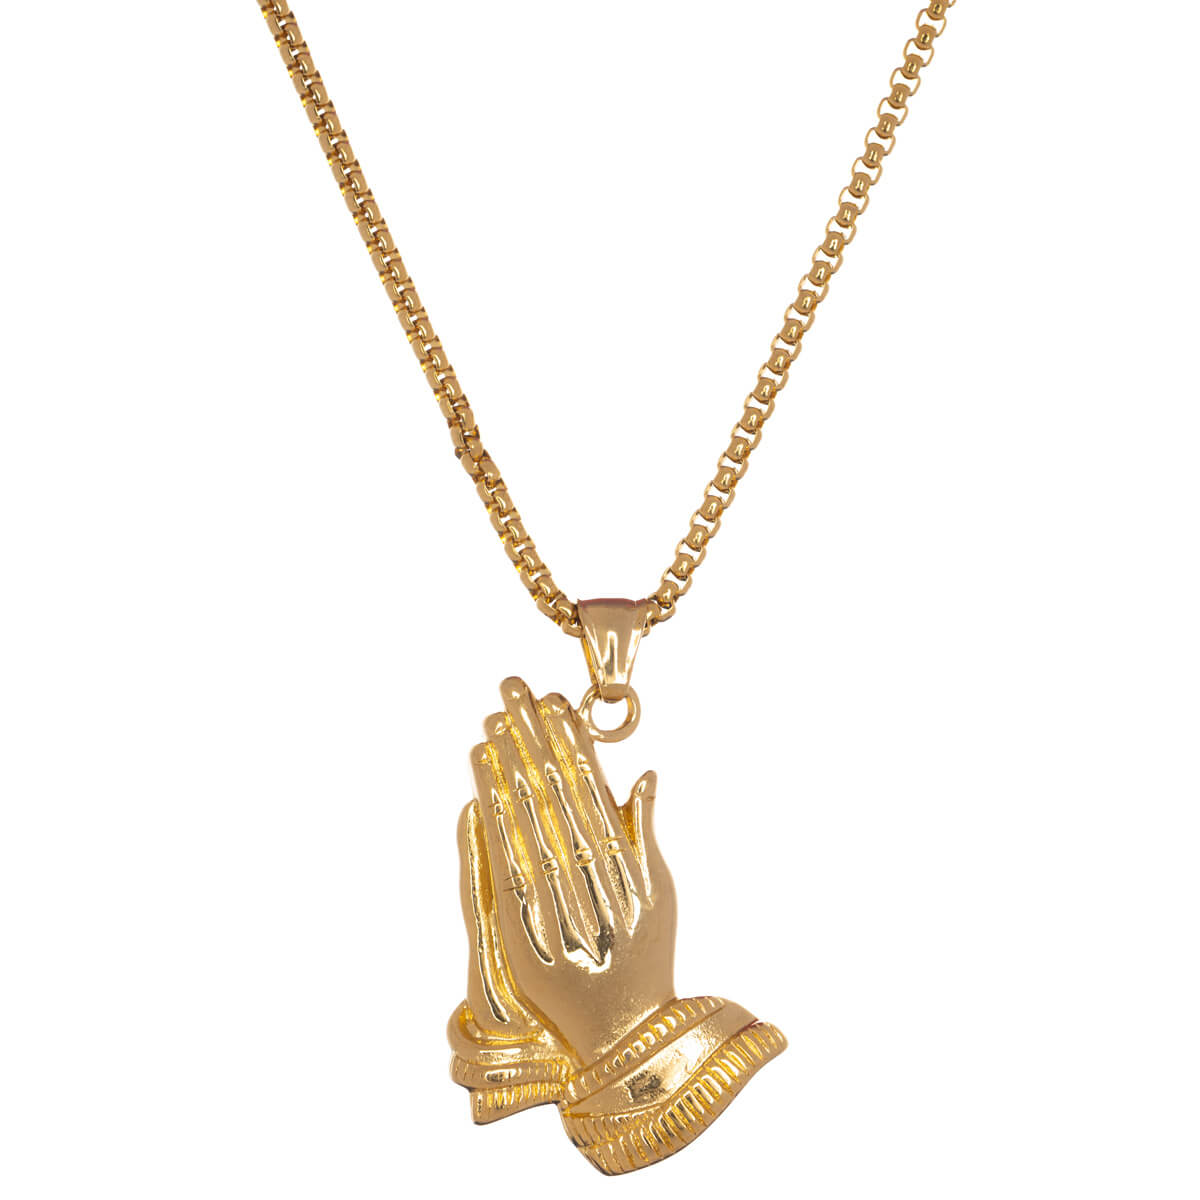 Praying hands pendant steel necklace 54cm